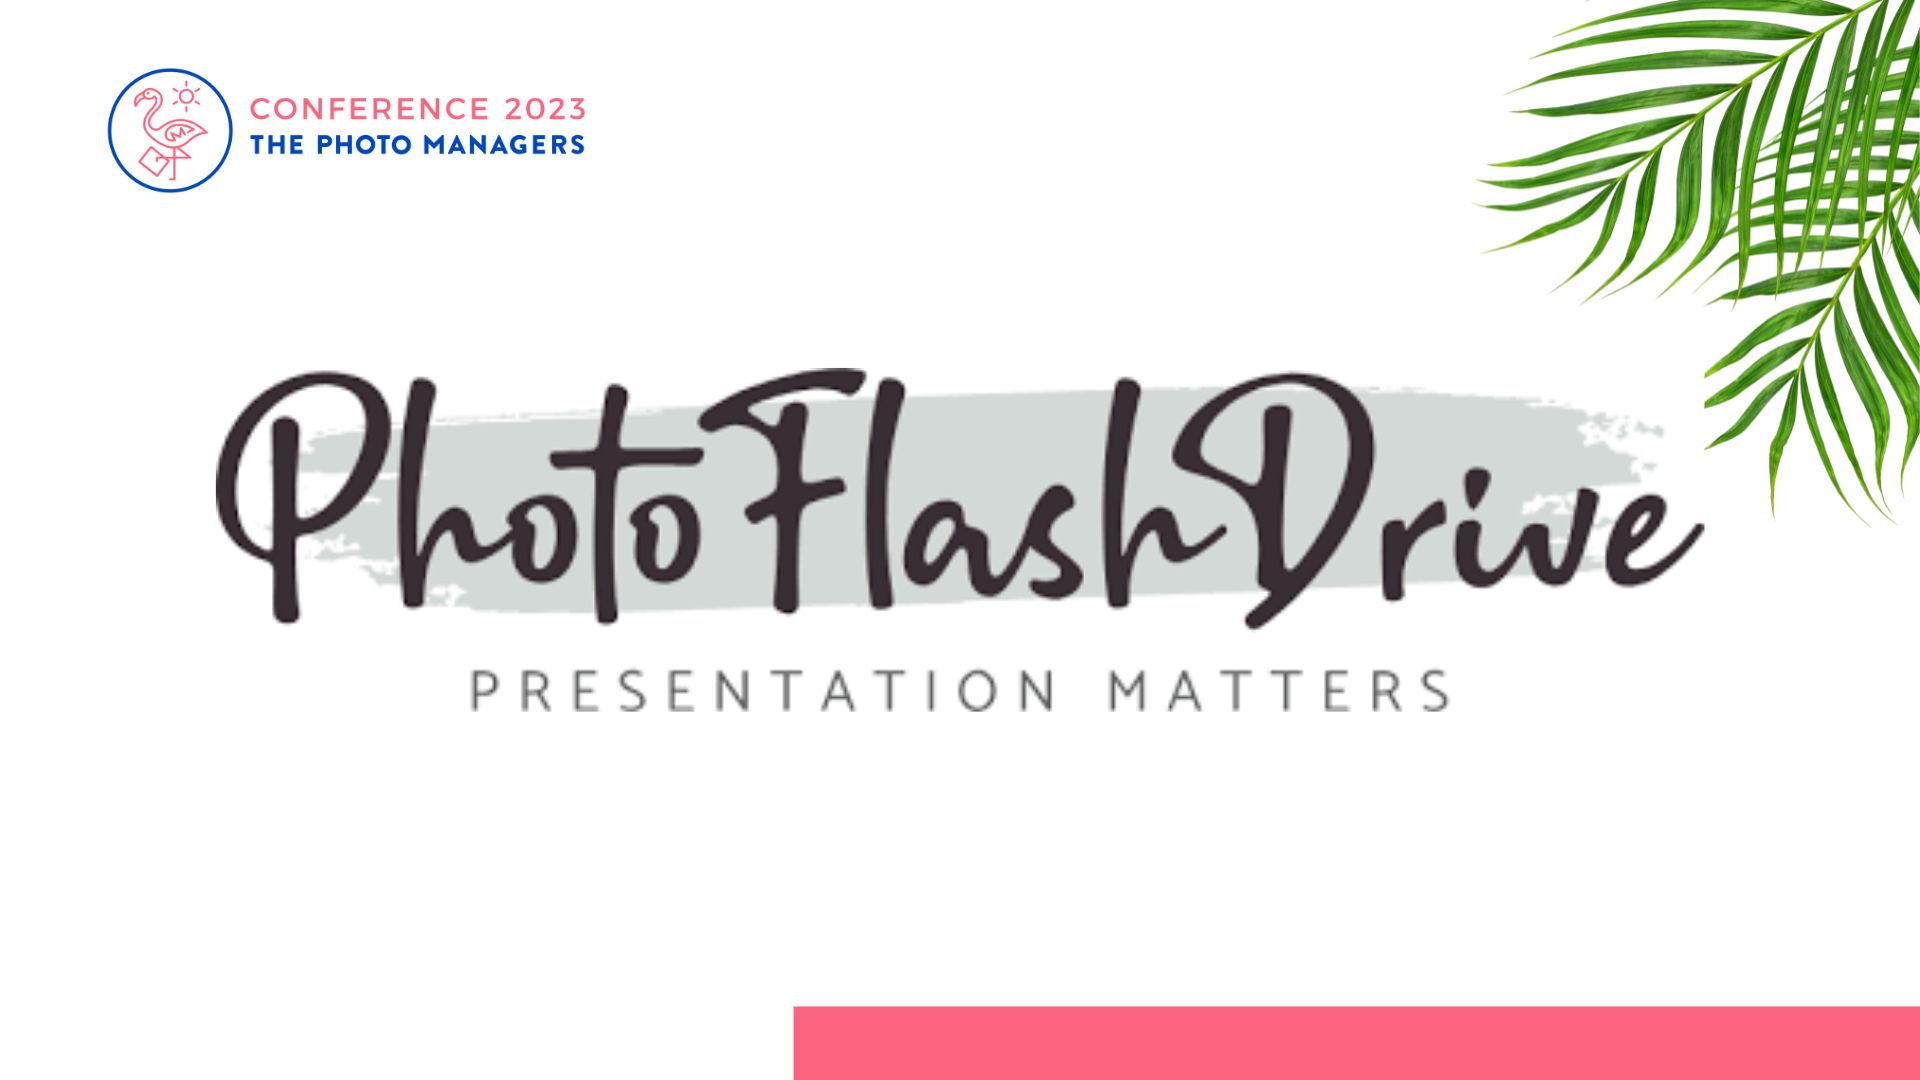 PhotoFlashDrive Partner Spotlight 2023